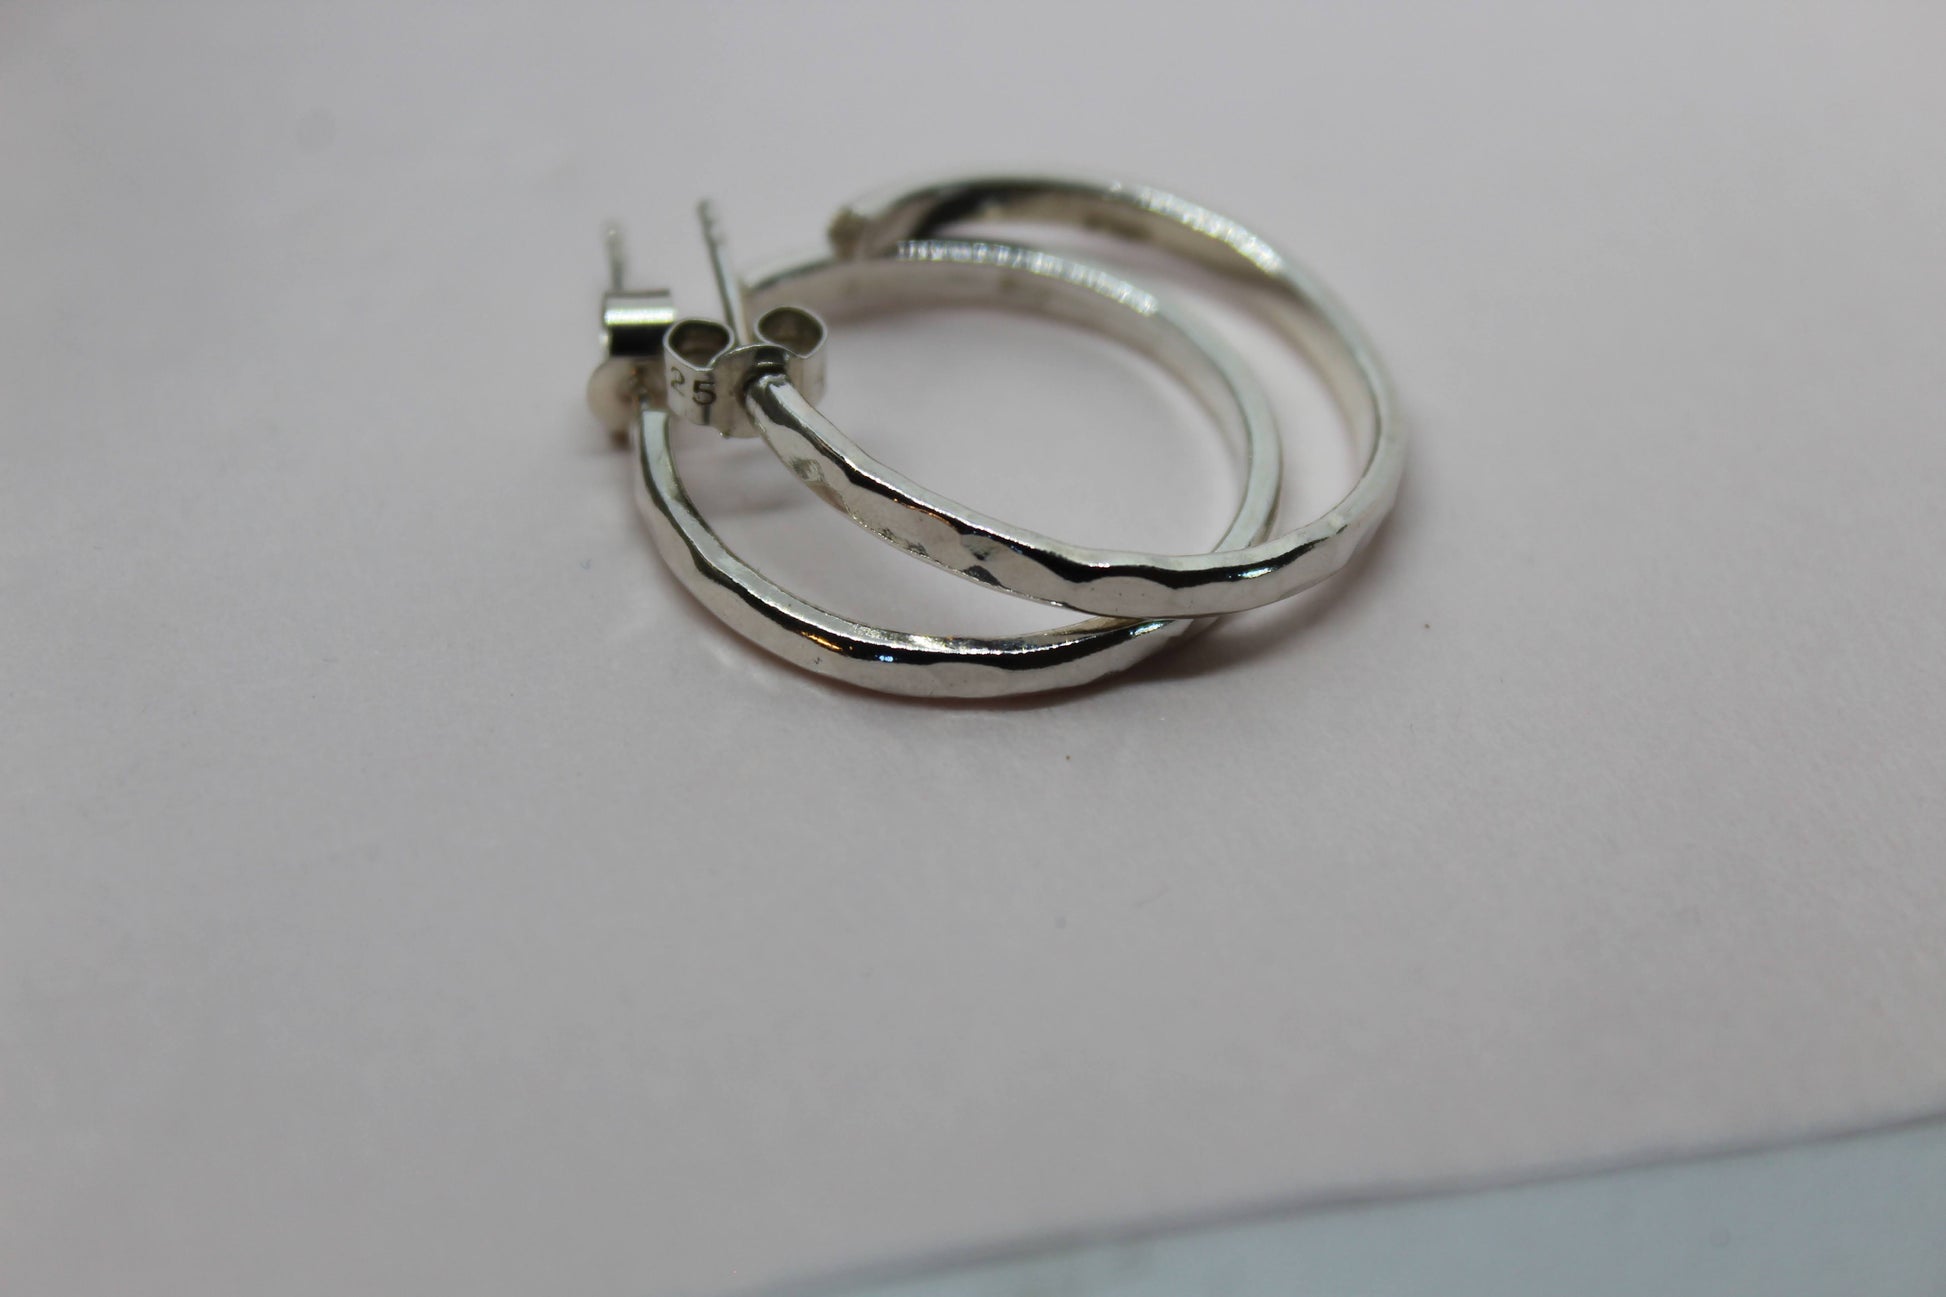 sterling silver hoop earrings size 20mm in circumference